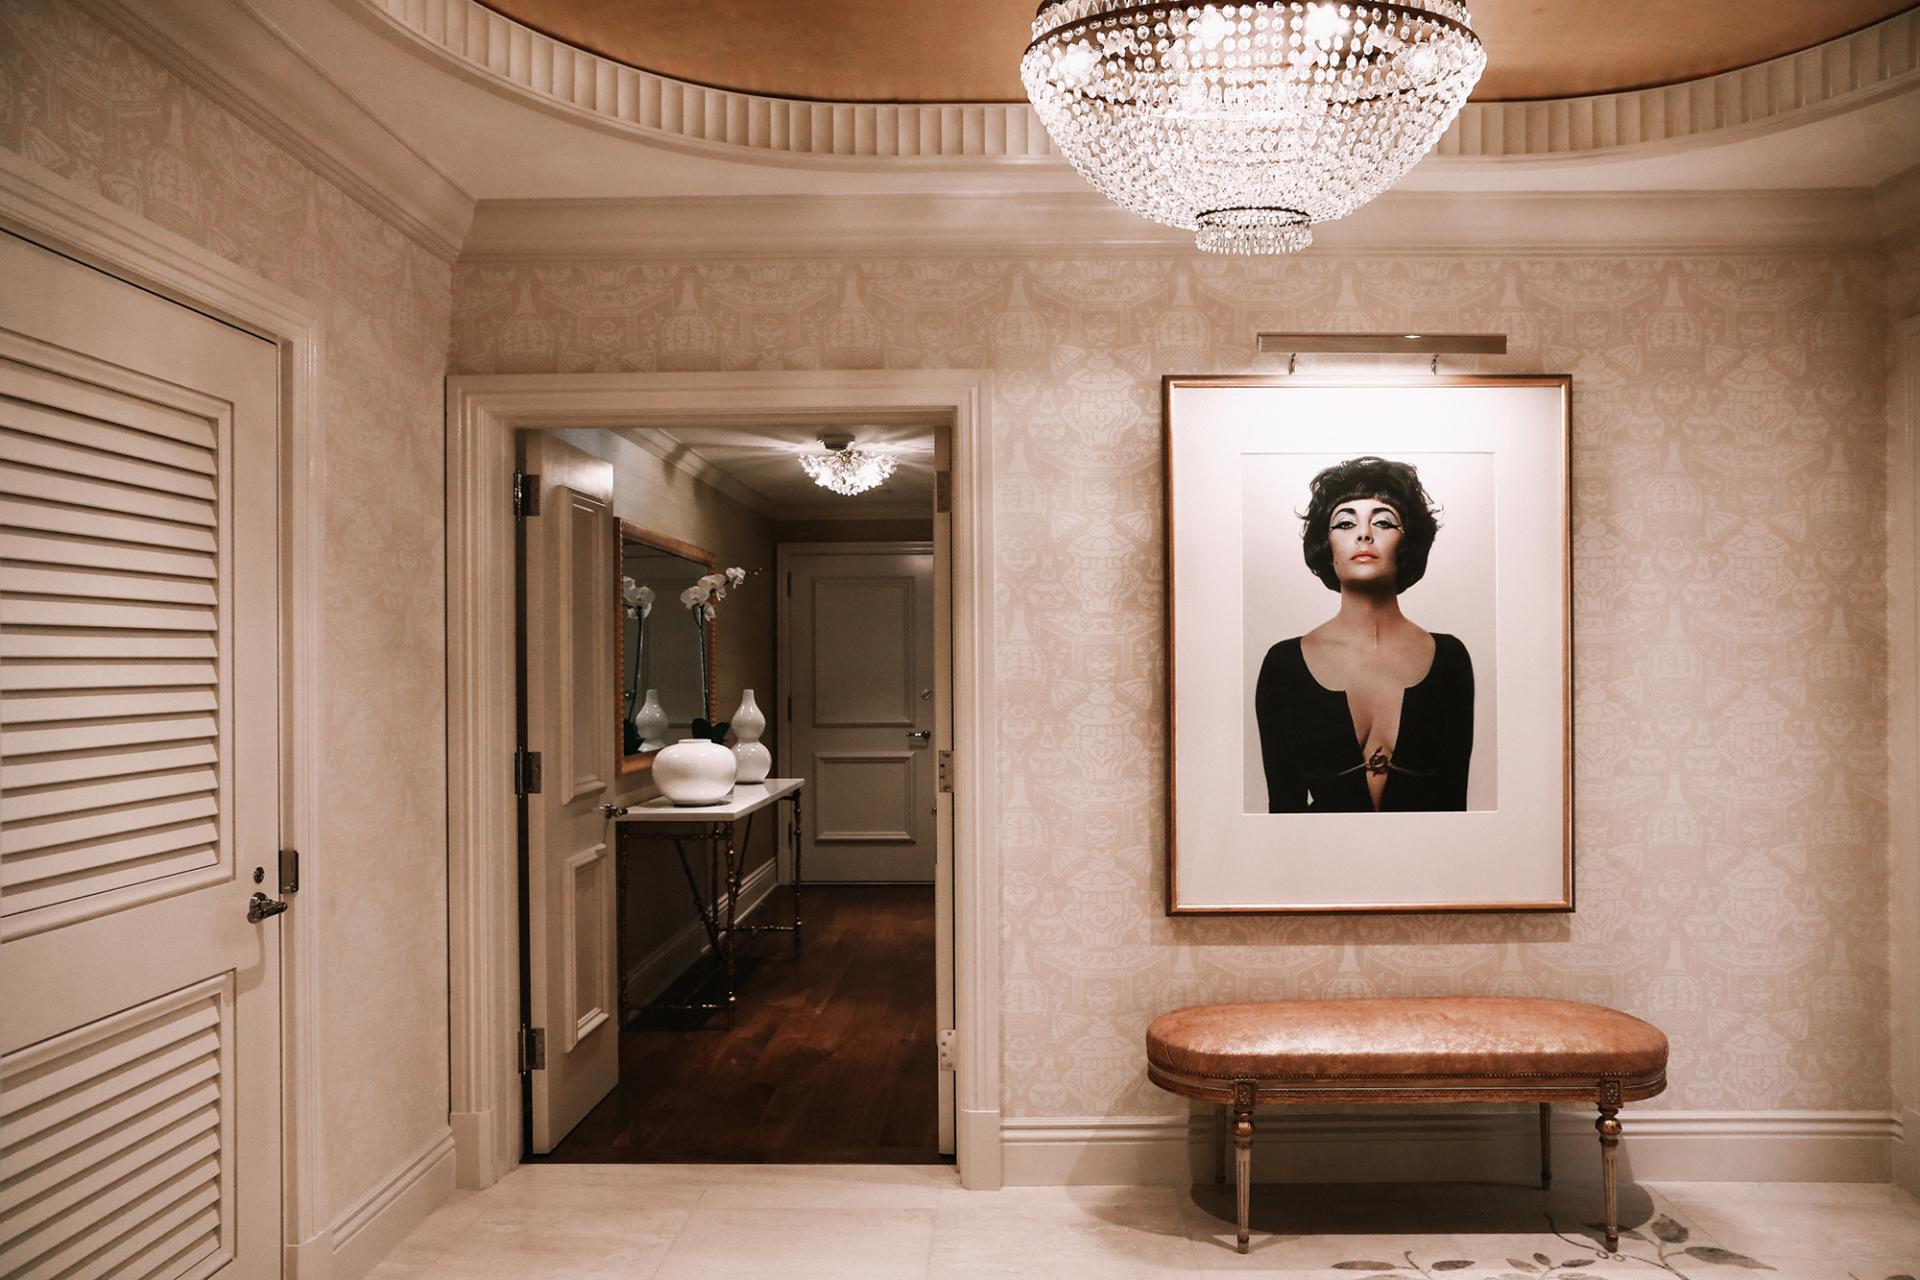 住進埃及妖后生前最愛的房間！The Dorchester Collection將兩間套房命名為Elizabeth Taylor